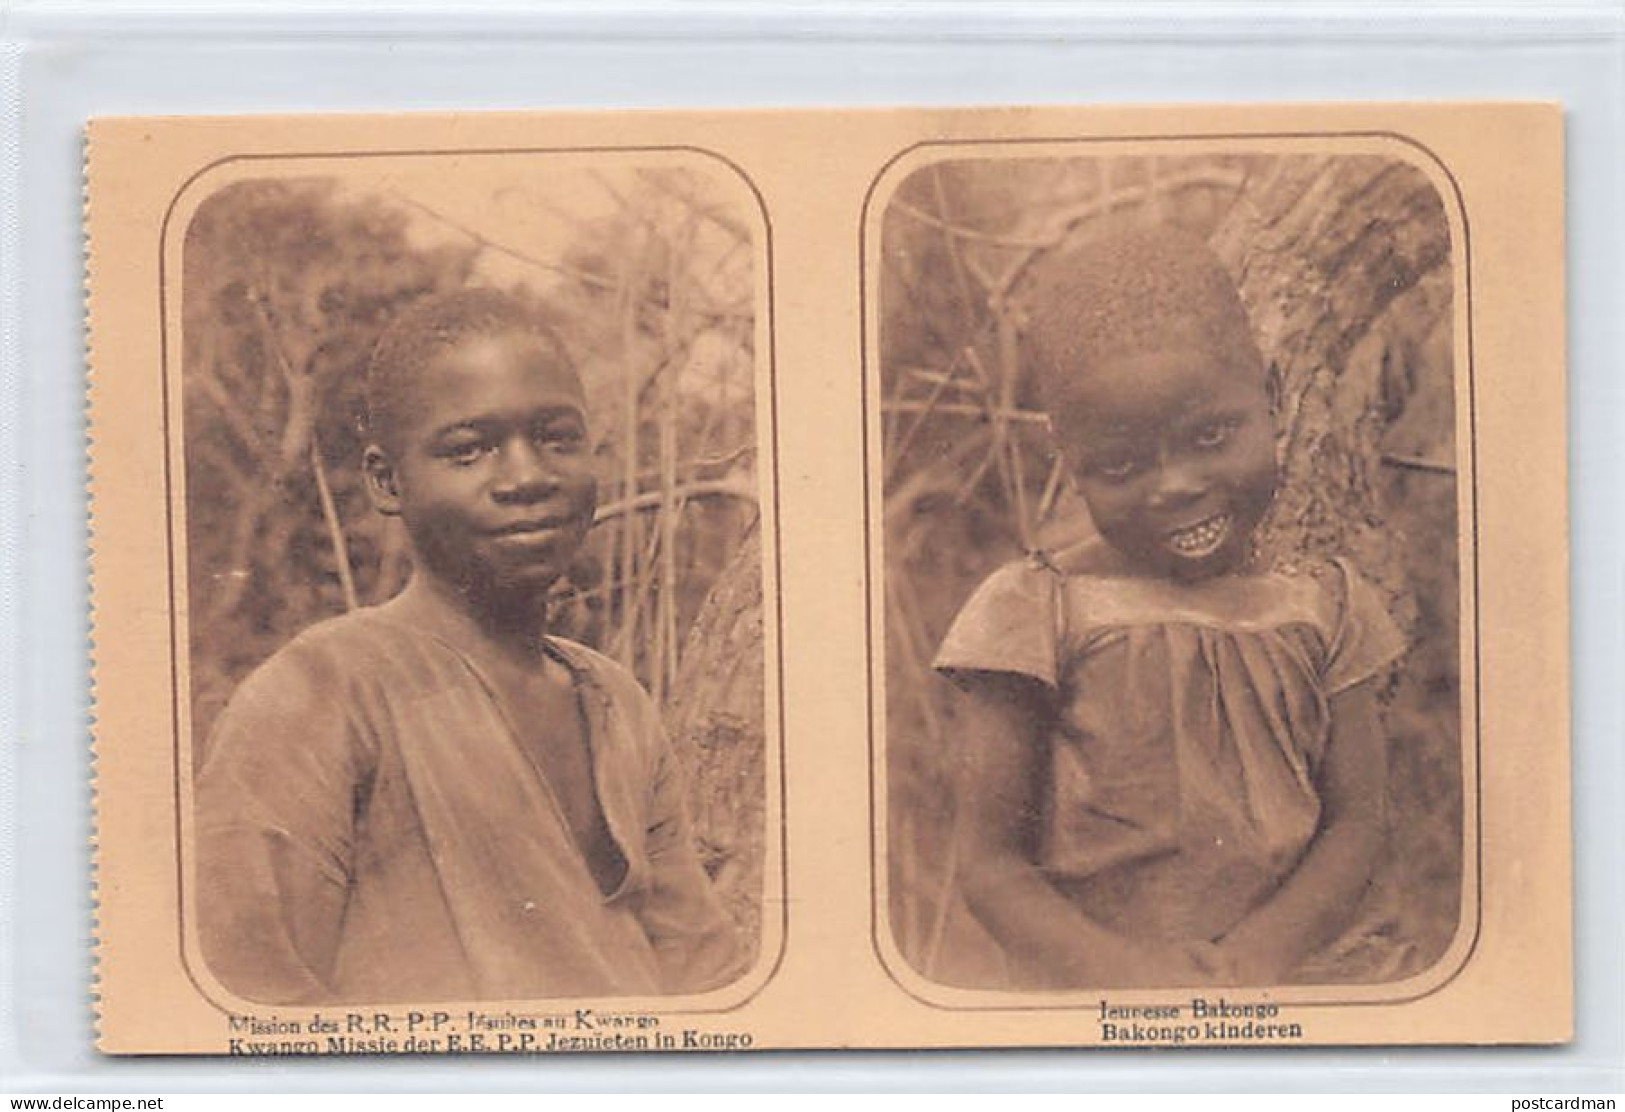 CONGO KINSHASA - Jeunesse Bakongo - Ed. Mission Des Jésuites Kwango  - Congo Belga